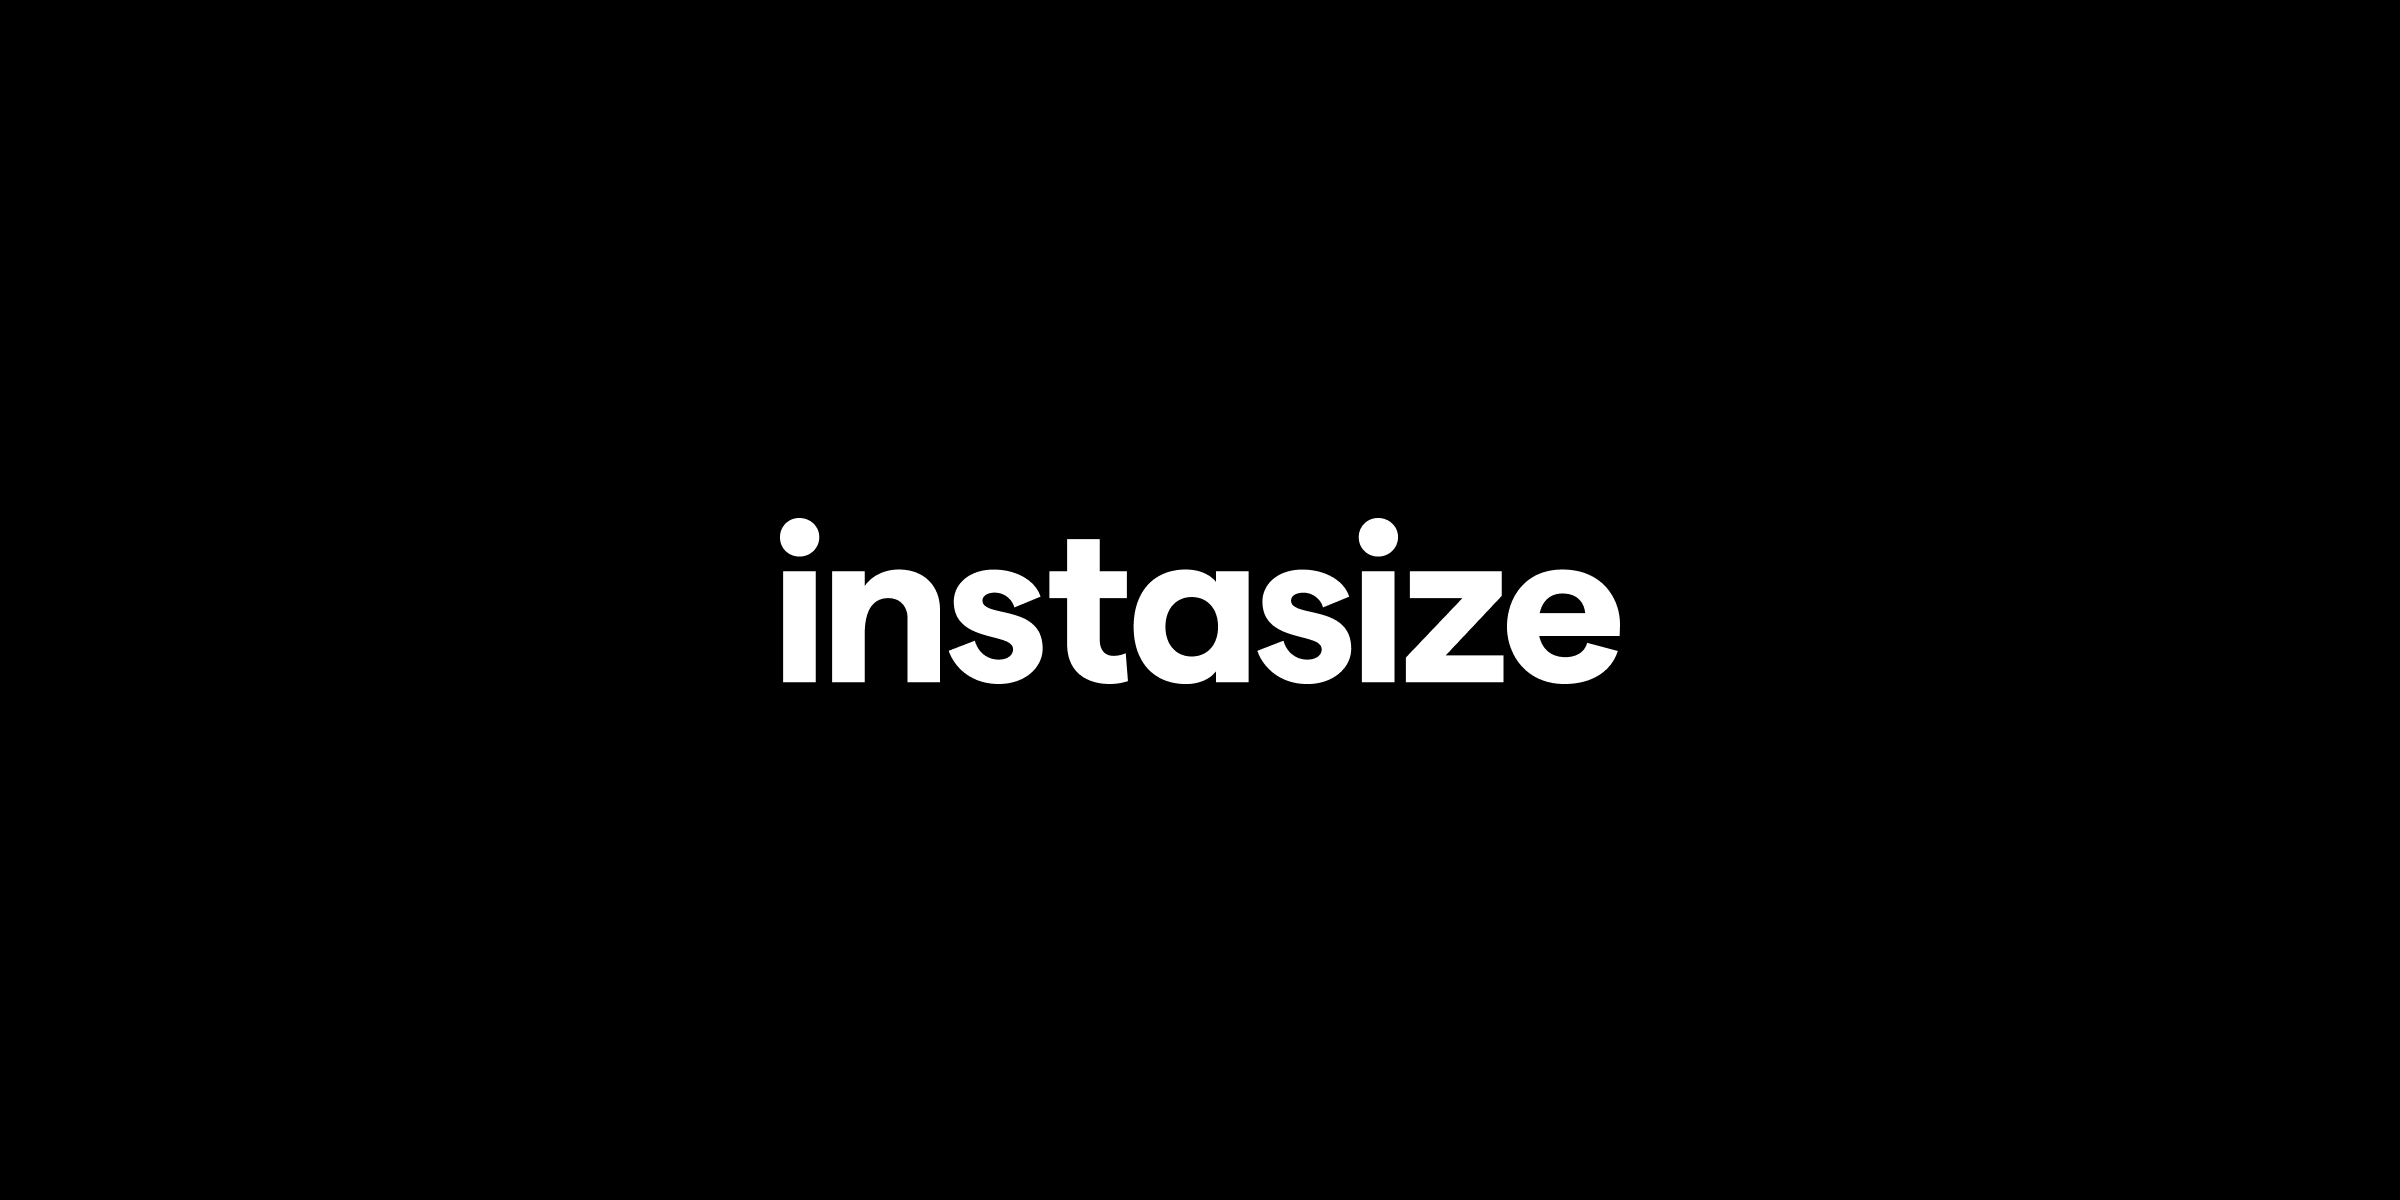 instasize blur background app